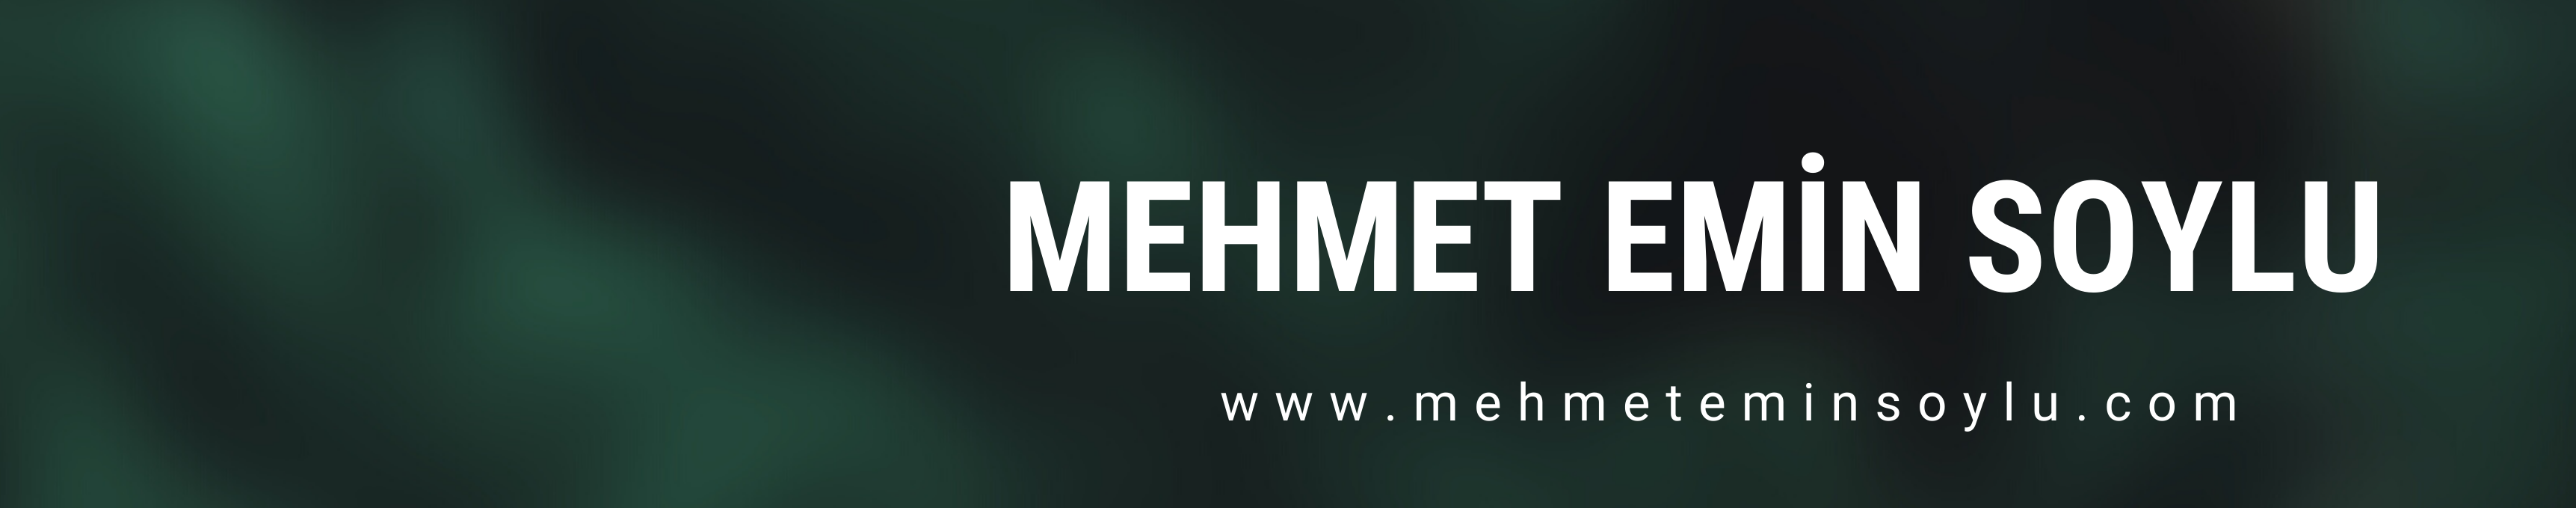 Mehmet Emin Soylu's profile banner